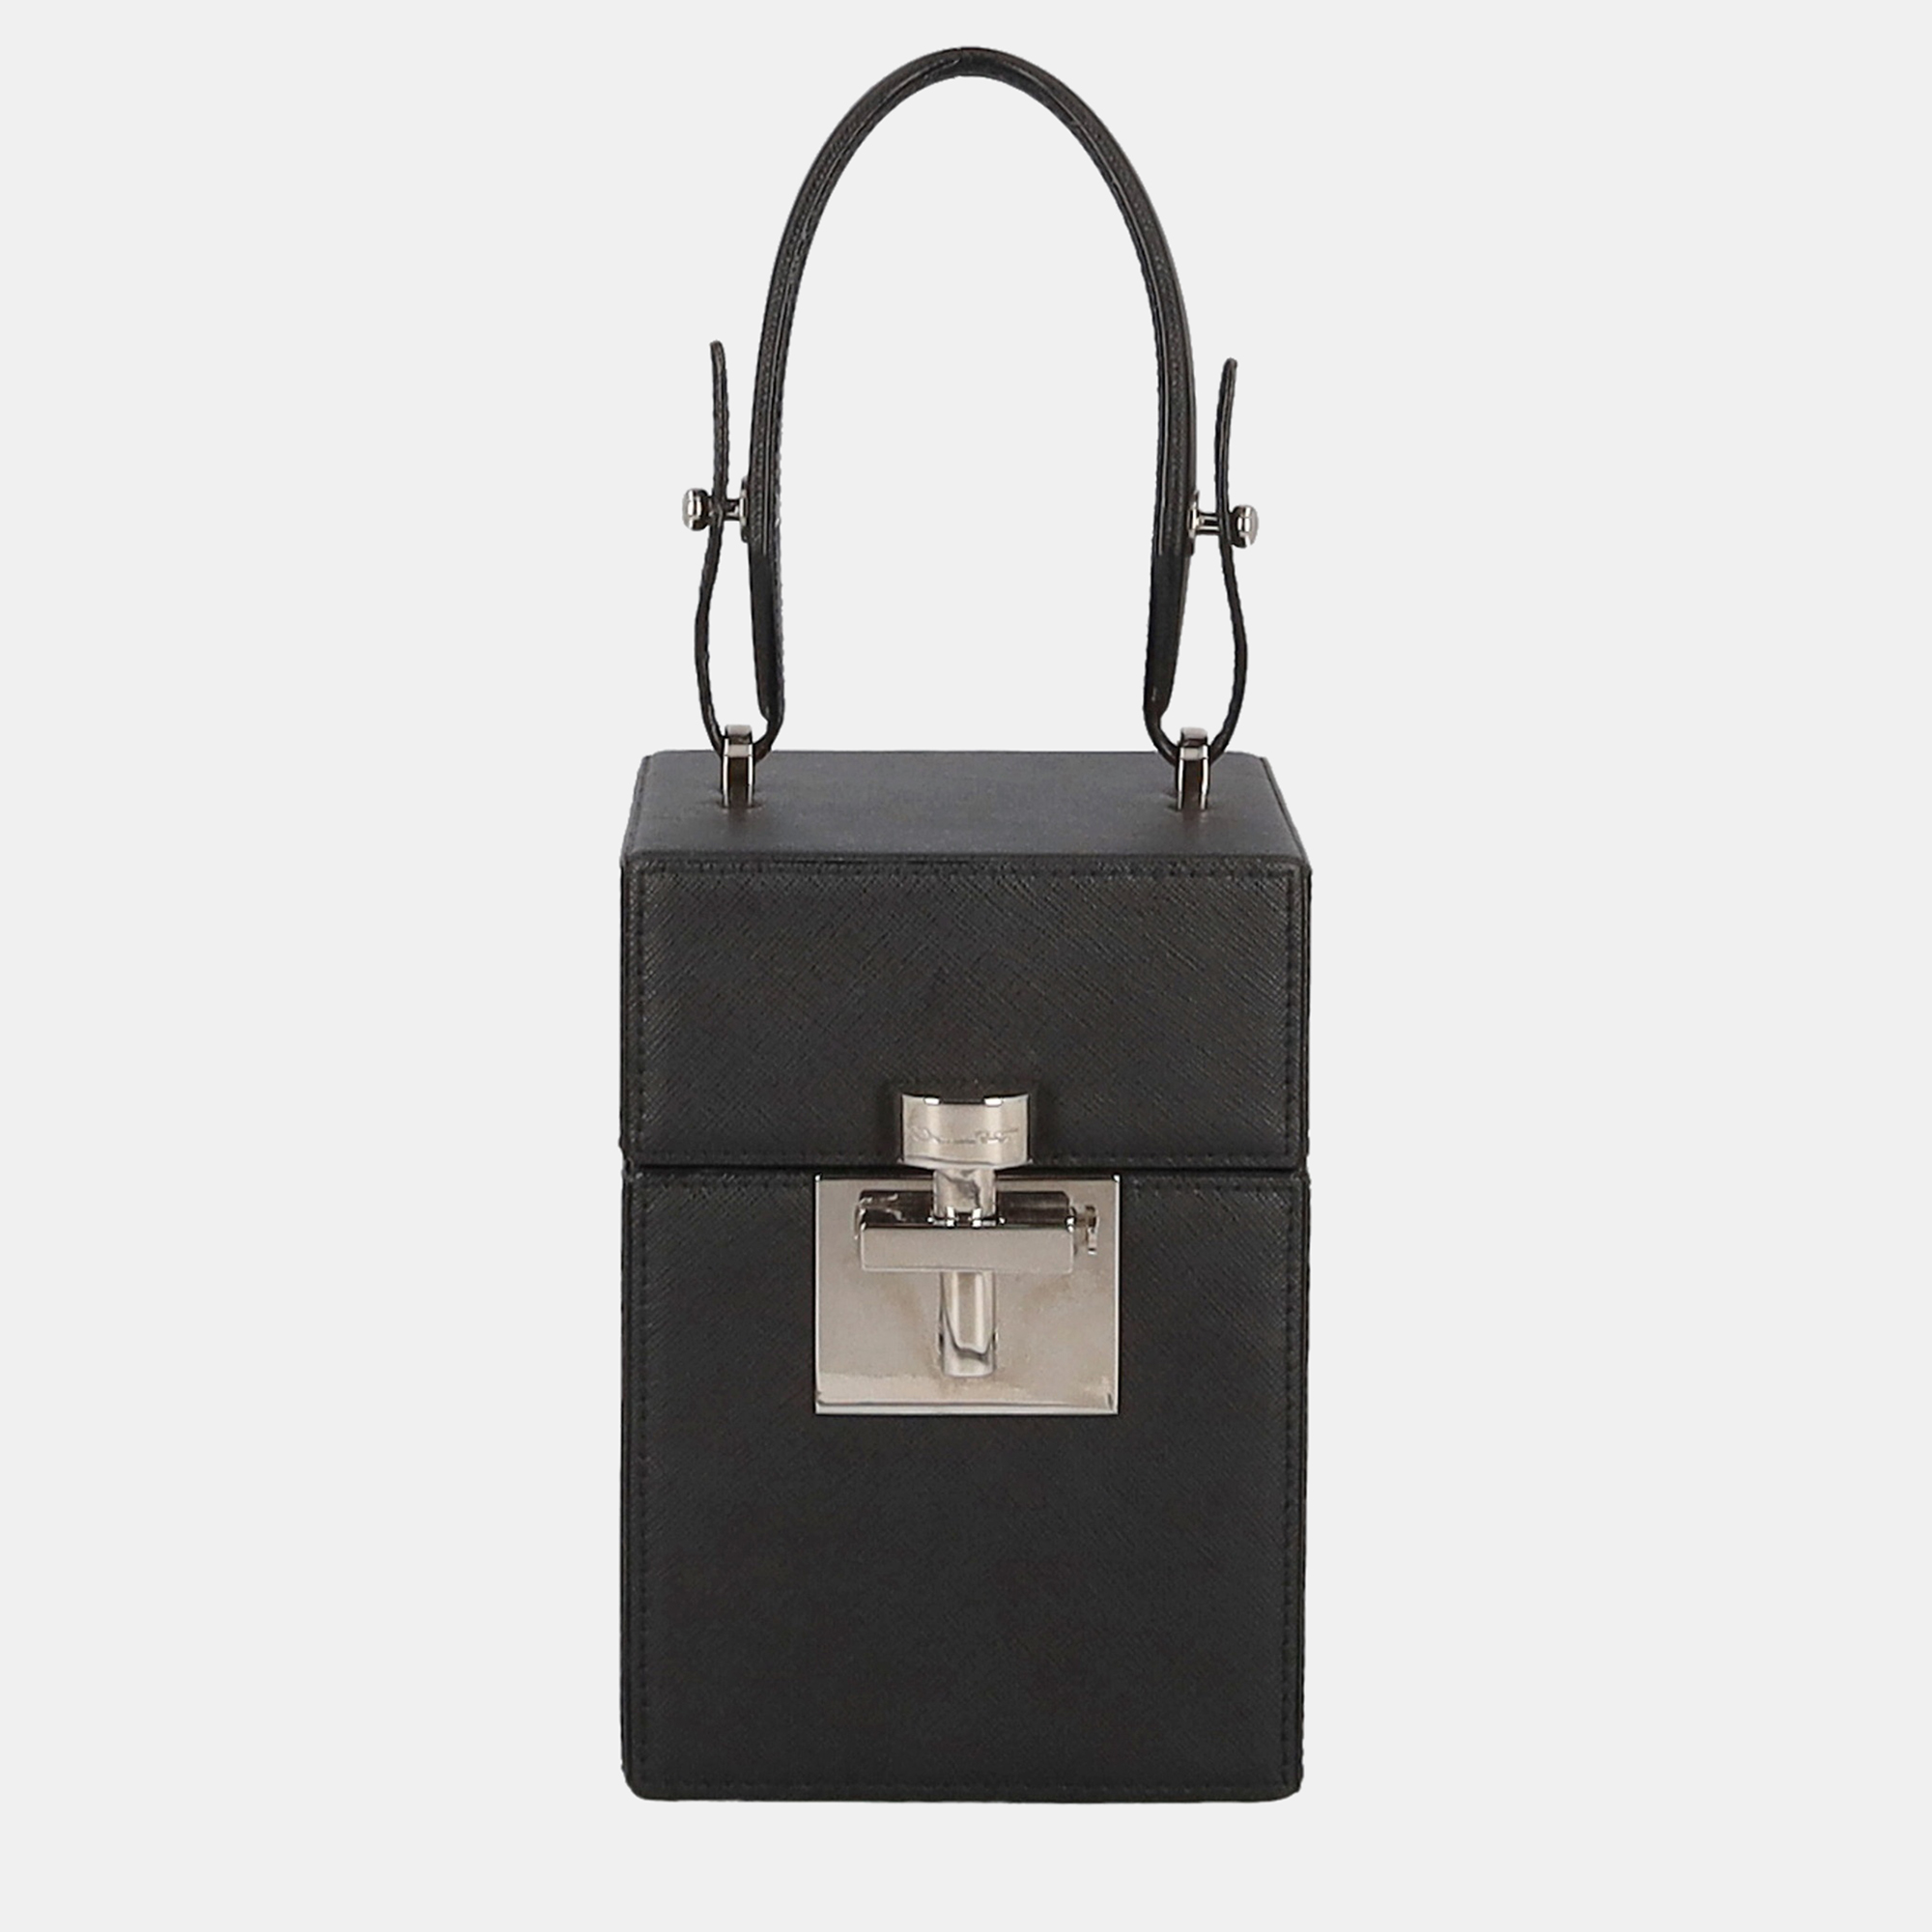 Oscar De La Renta  Women's Leather Handbag - Black - One Size